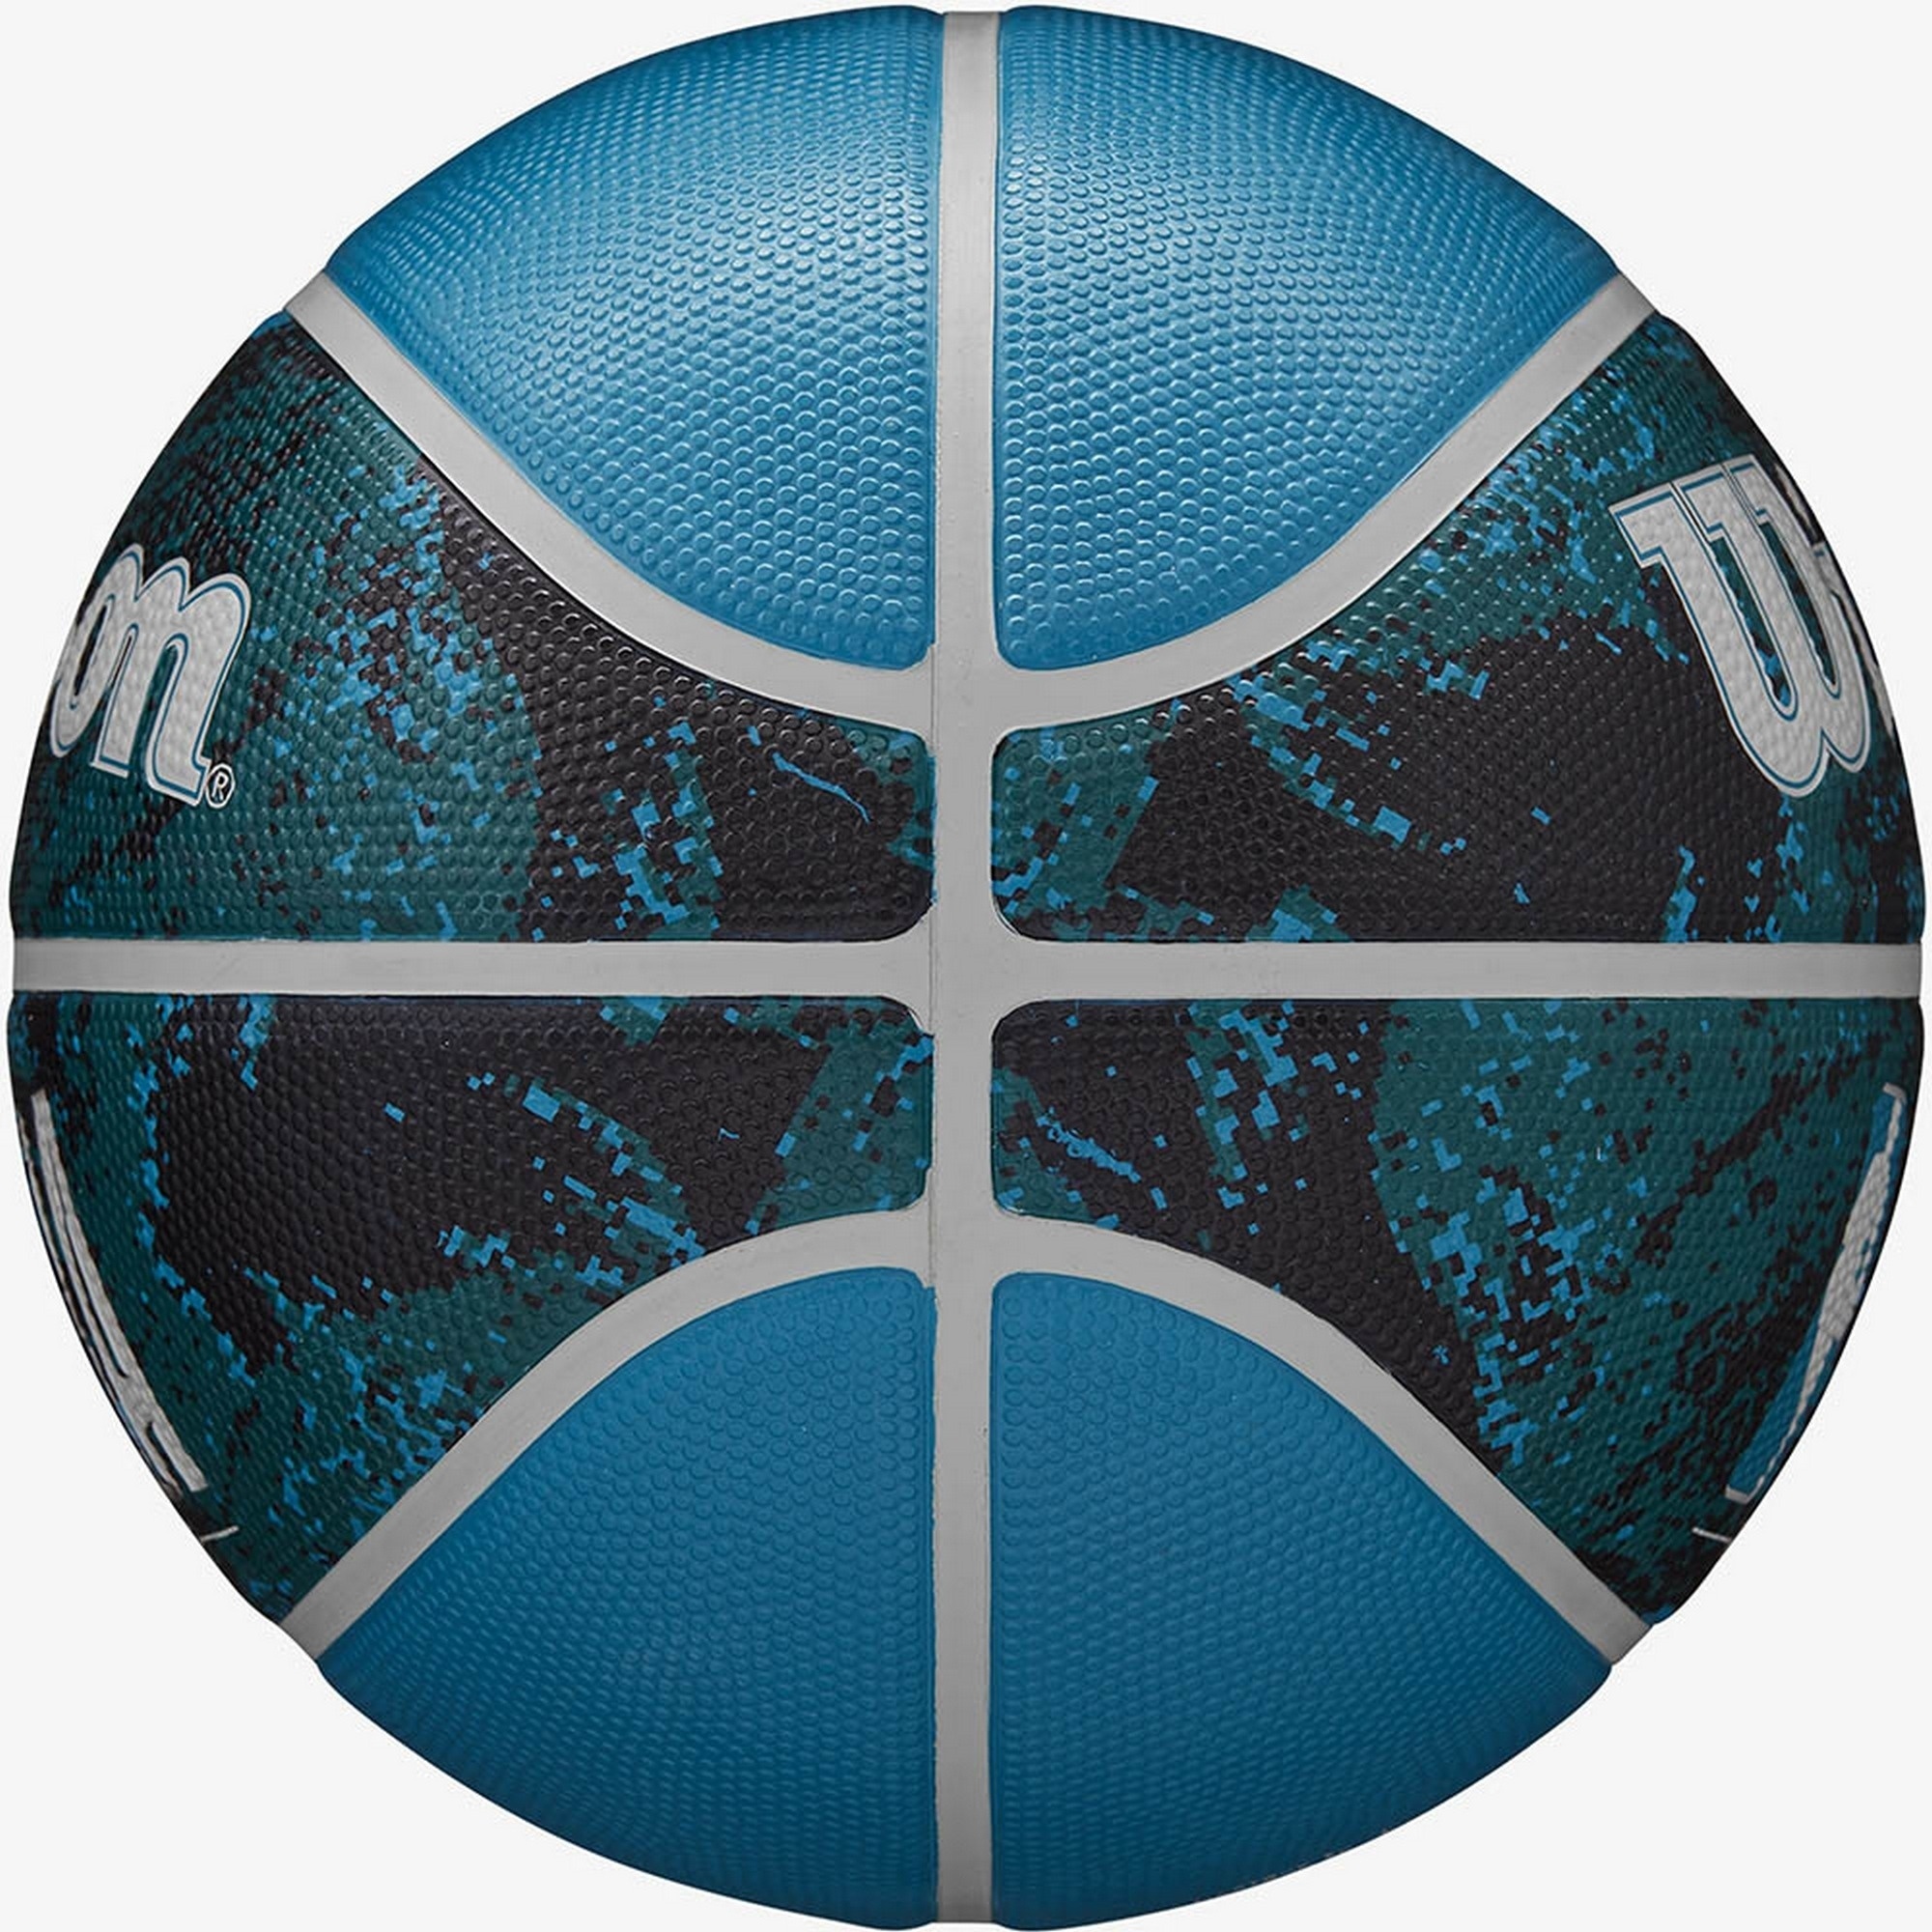 Мяч баскетбольный Wilson NBA DRV Plus WZ3012602XB р.6 2000_2000